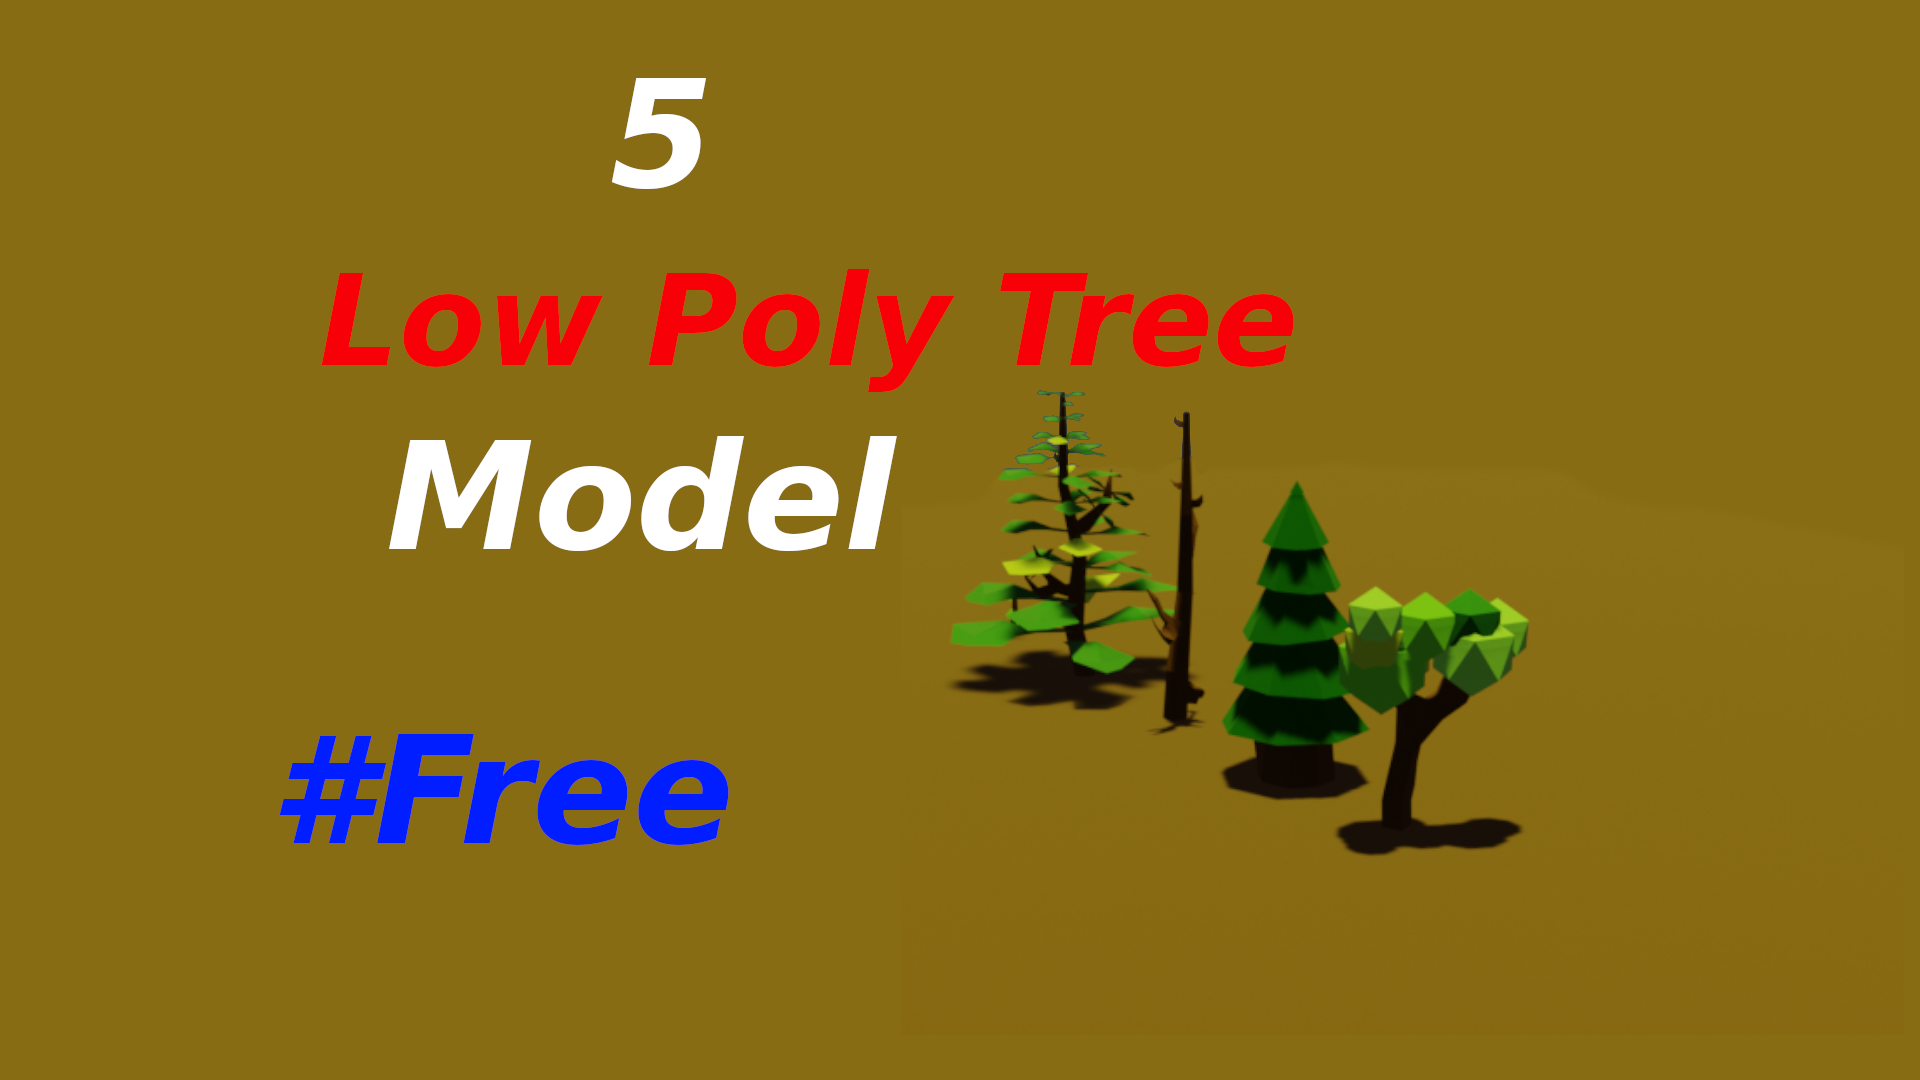 Released 5 Low Poly Tree Blender Models